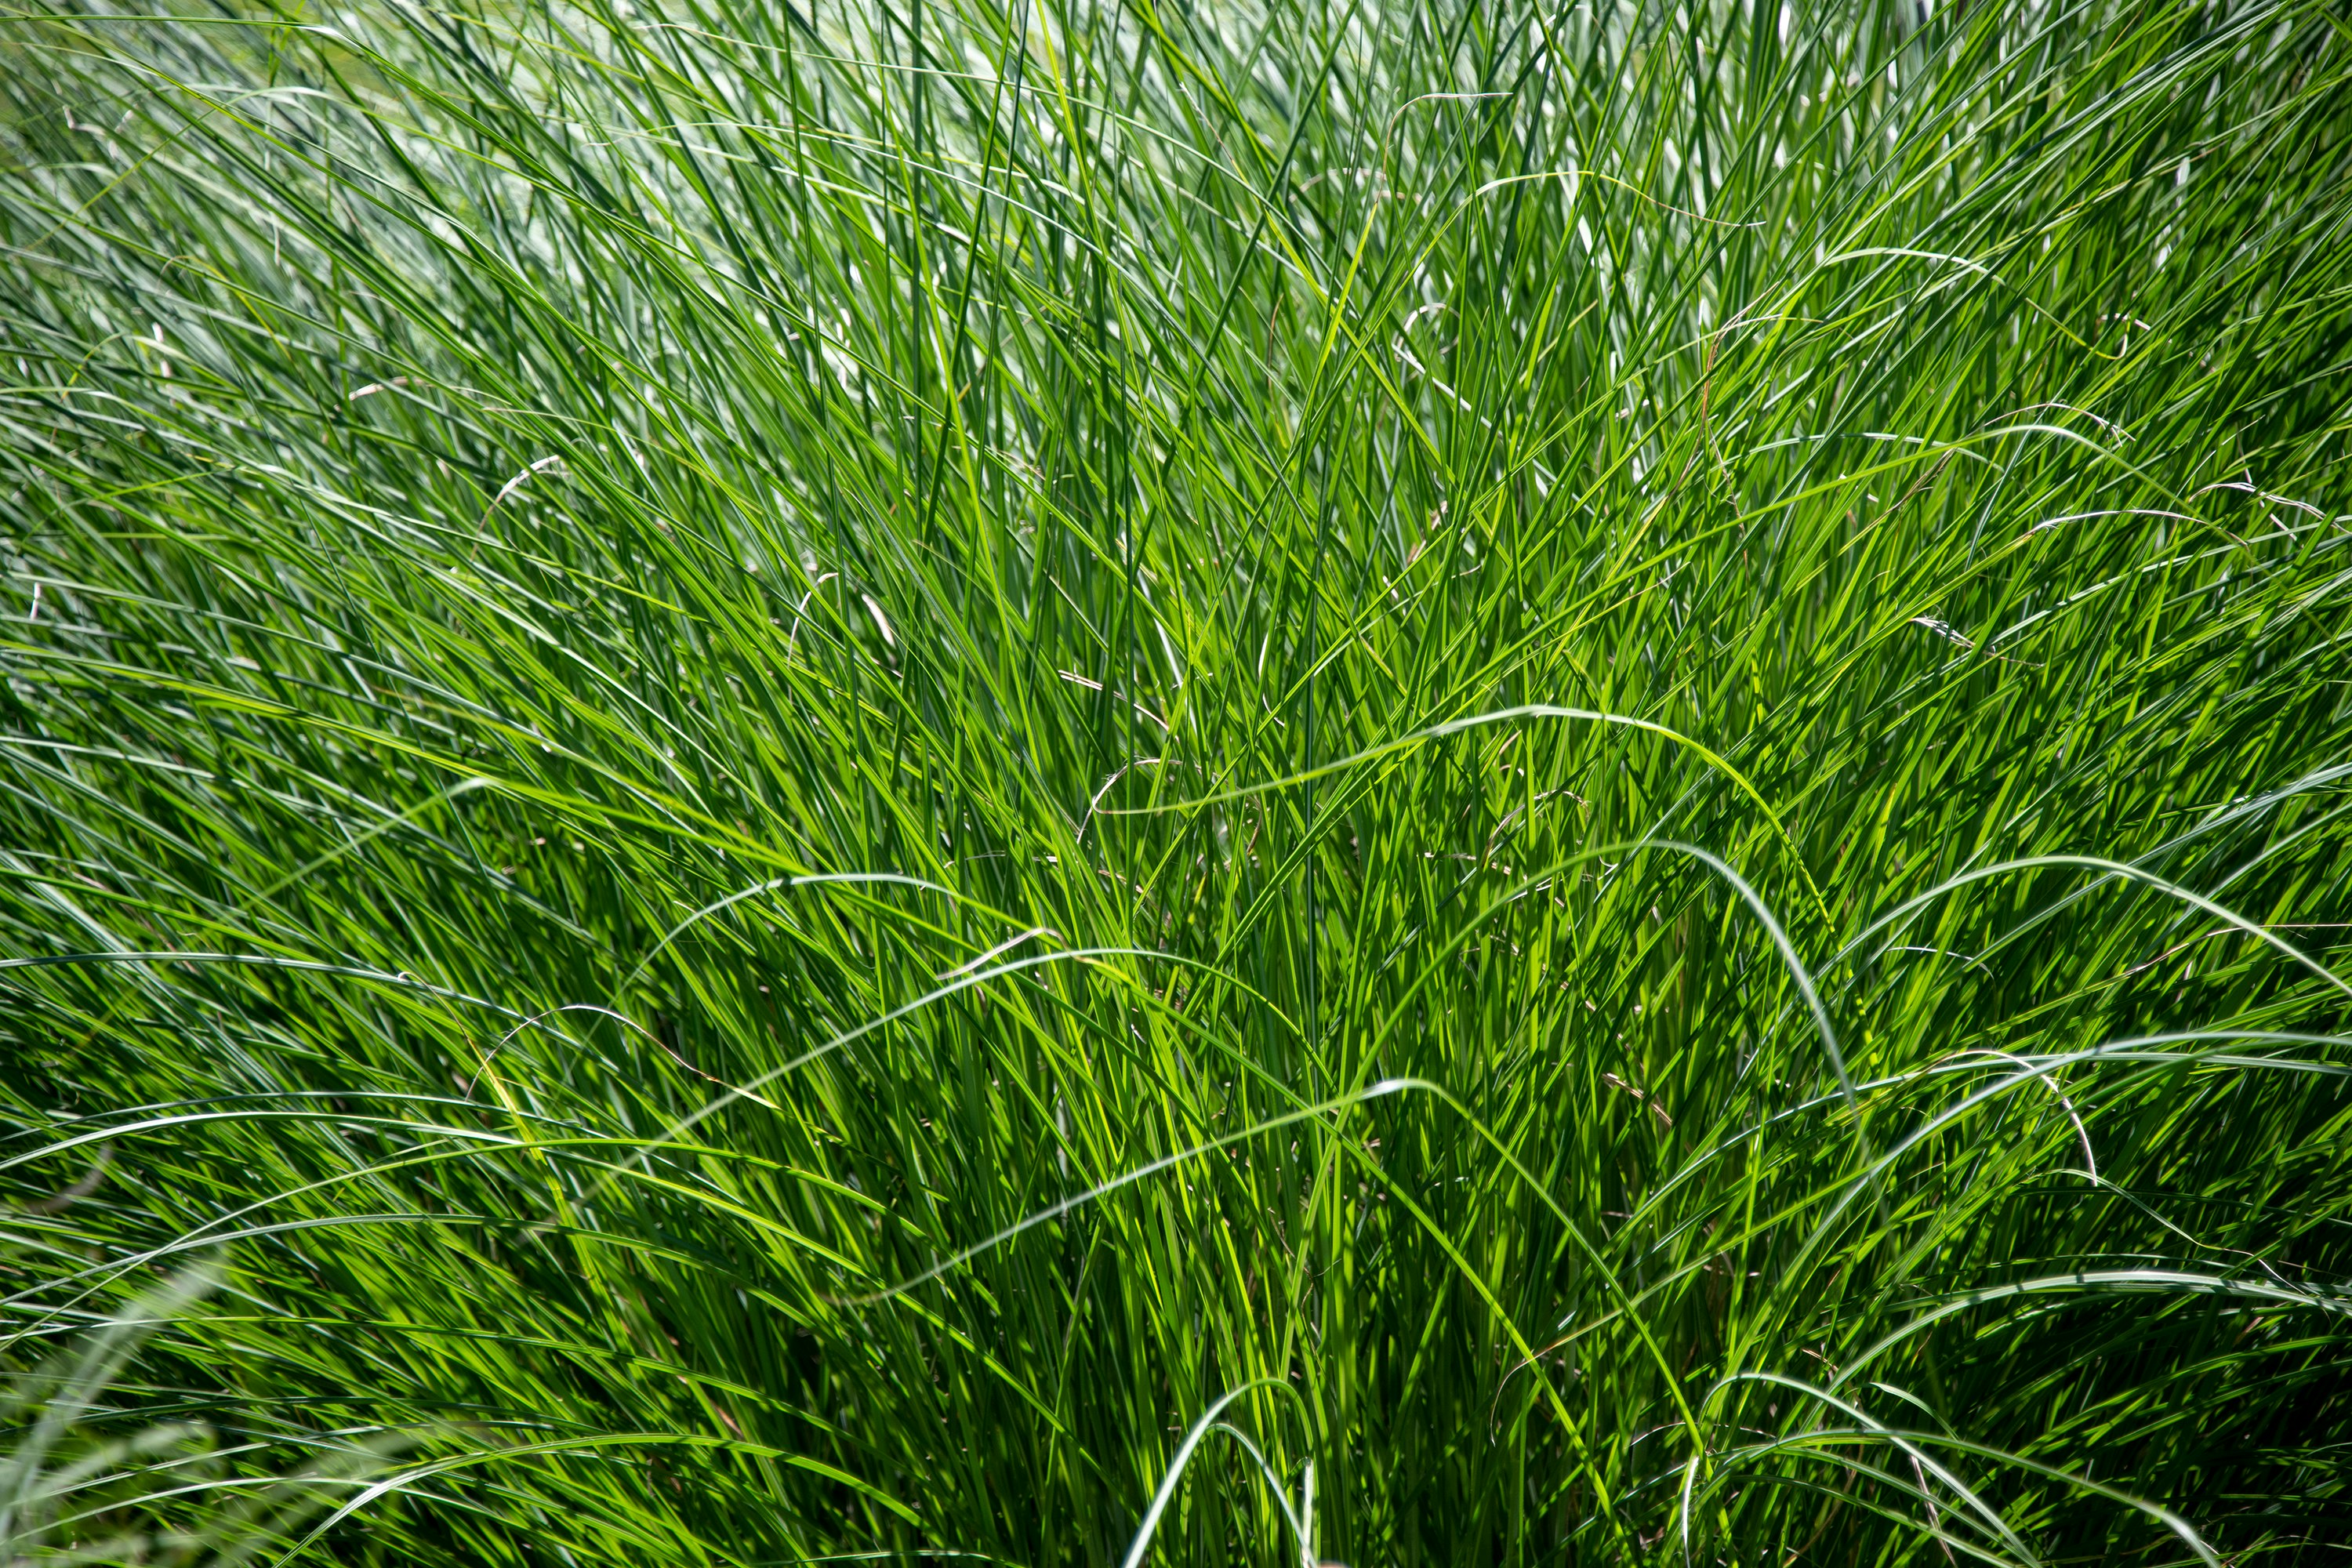 Wisps of green pampas grass catching the sunlight.